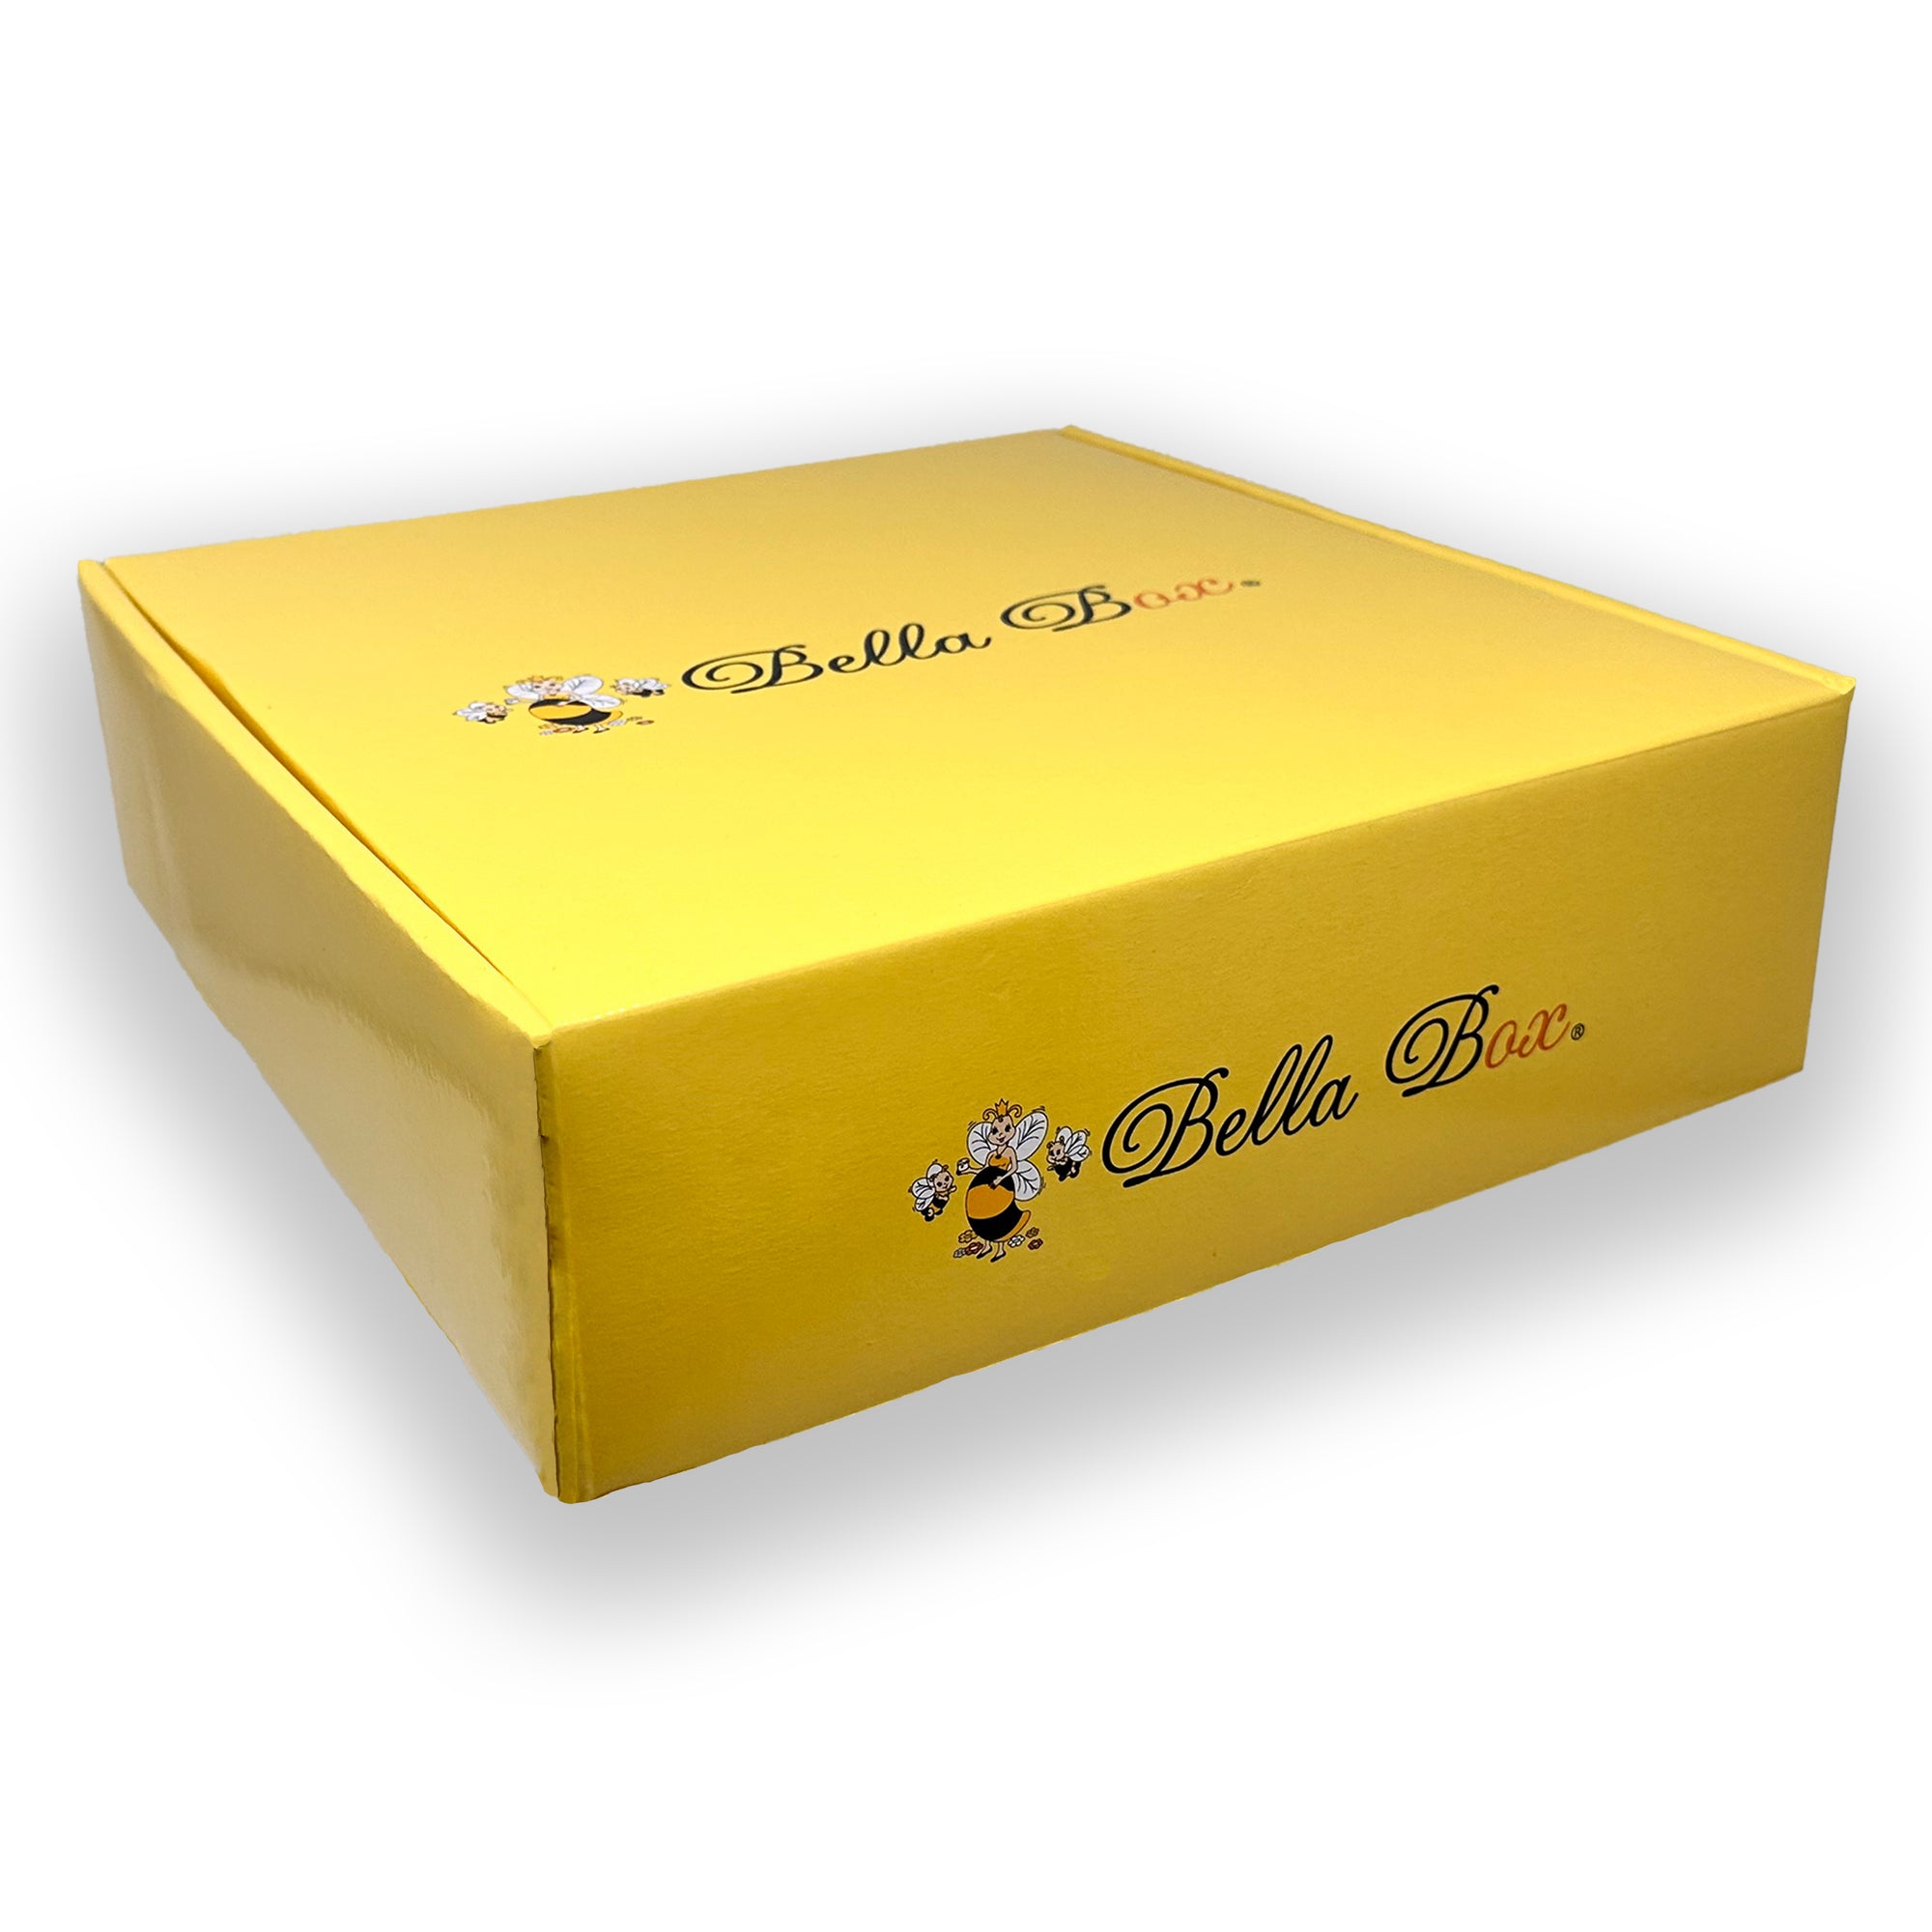 Bella B Gift Set - Nipple Nurture Butter 2oz and Nipple Nurture Breast Wipes 3-Pack